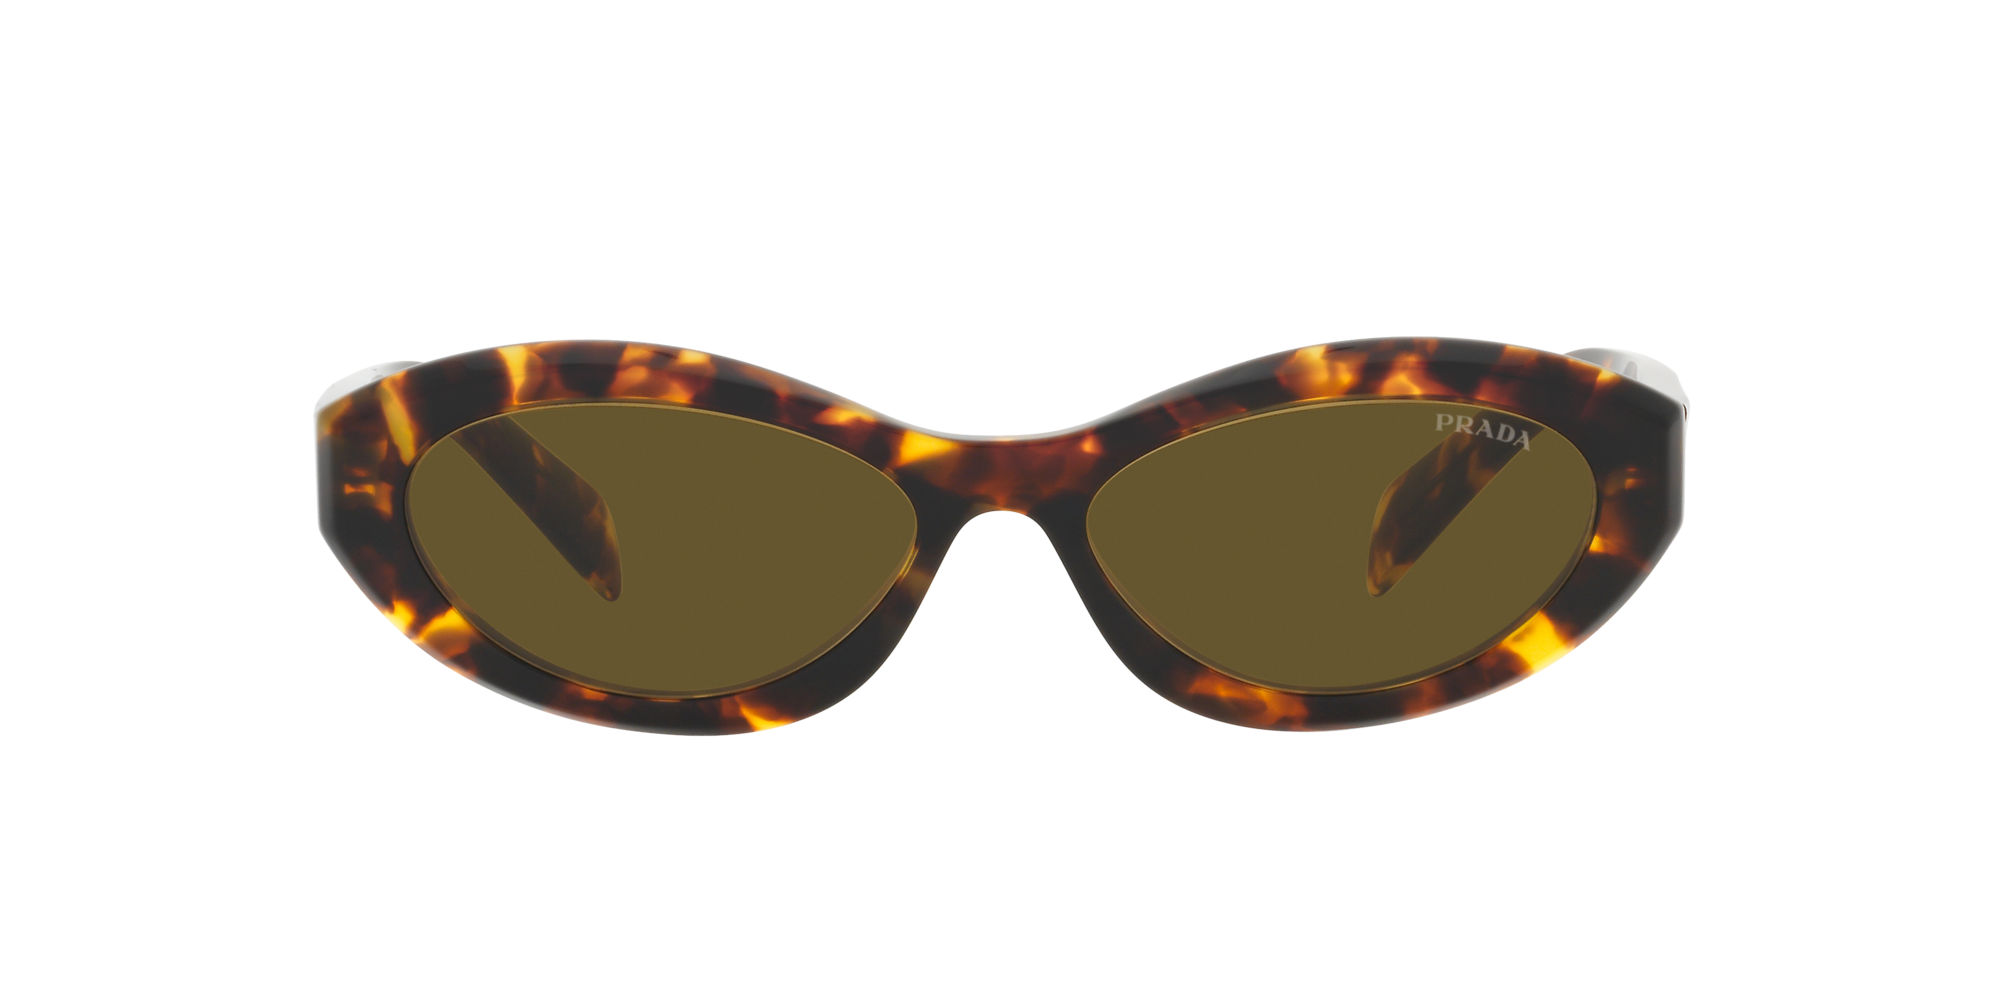 Prada 56mm Oversized Square Sunglasses - Brown Tortoise | Editorialist